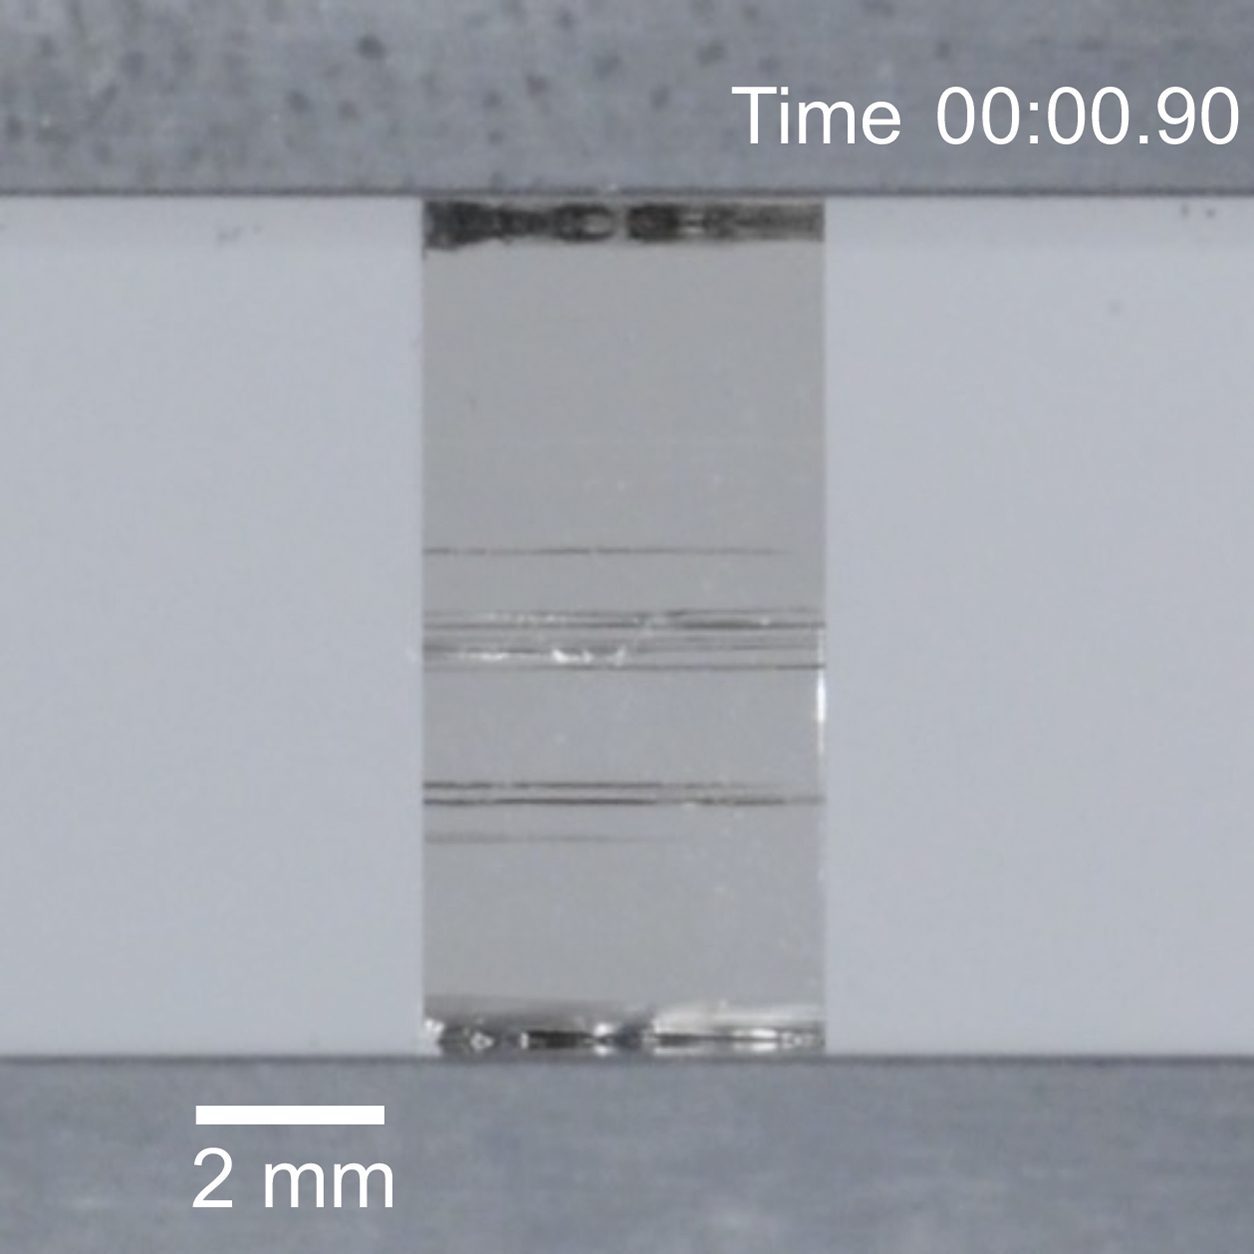 Single-crystal strontium titanate deformed at room temperature during bulk compression